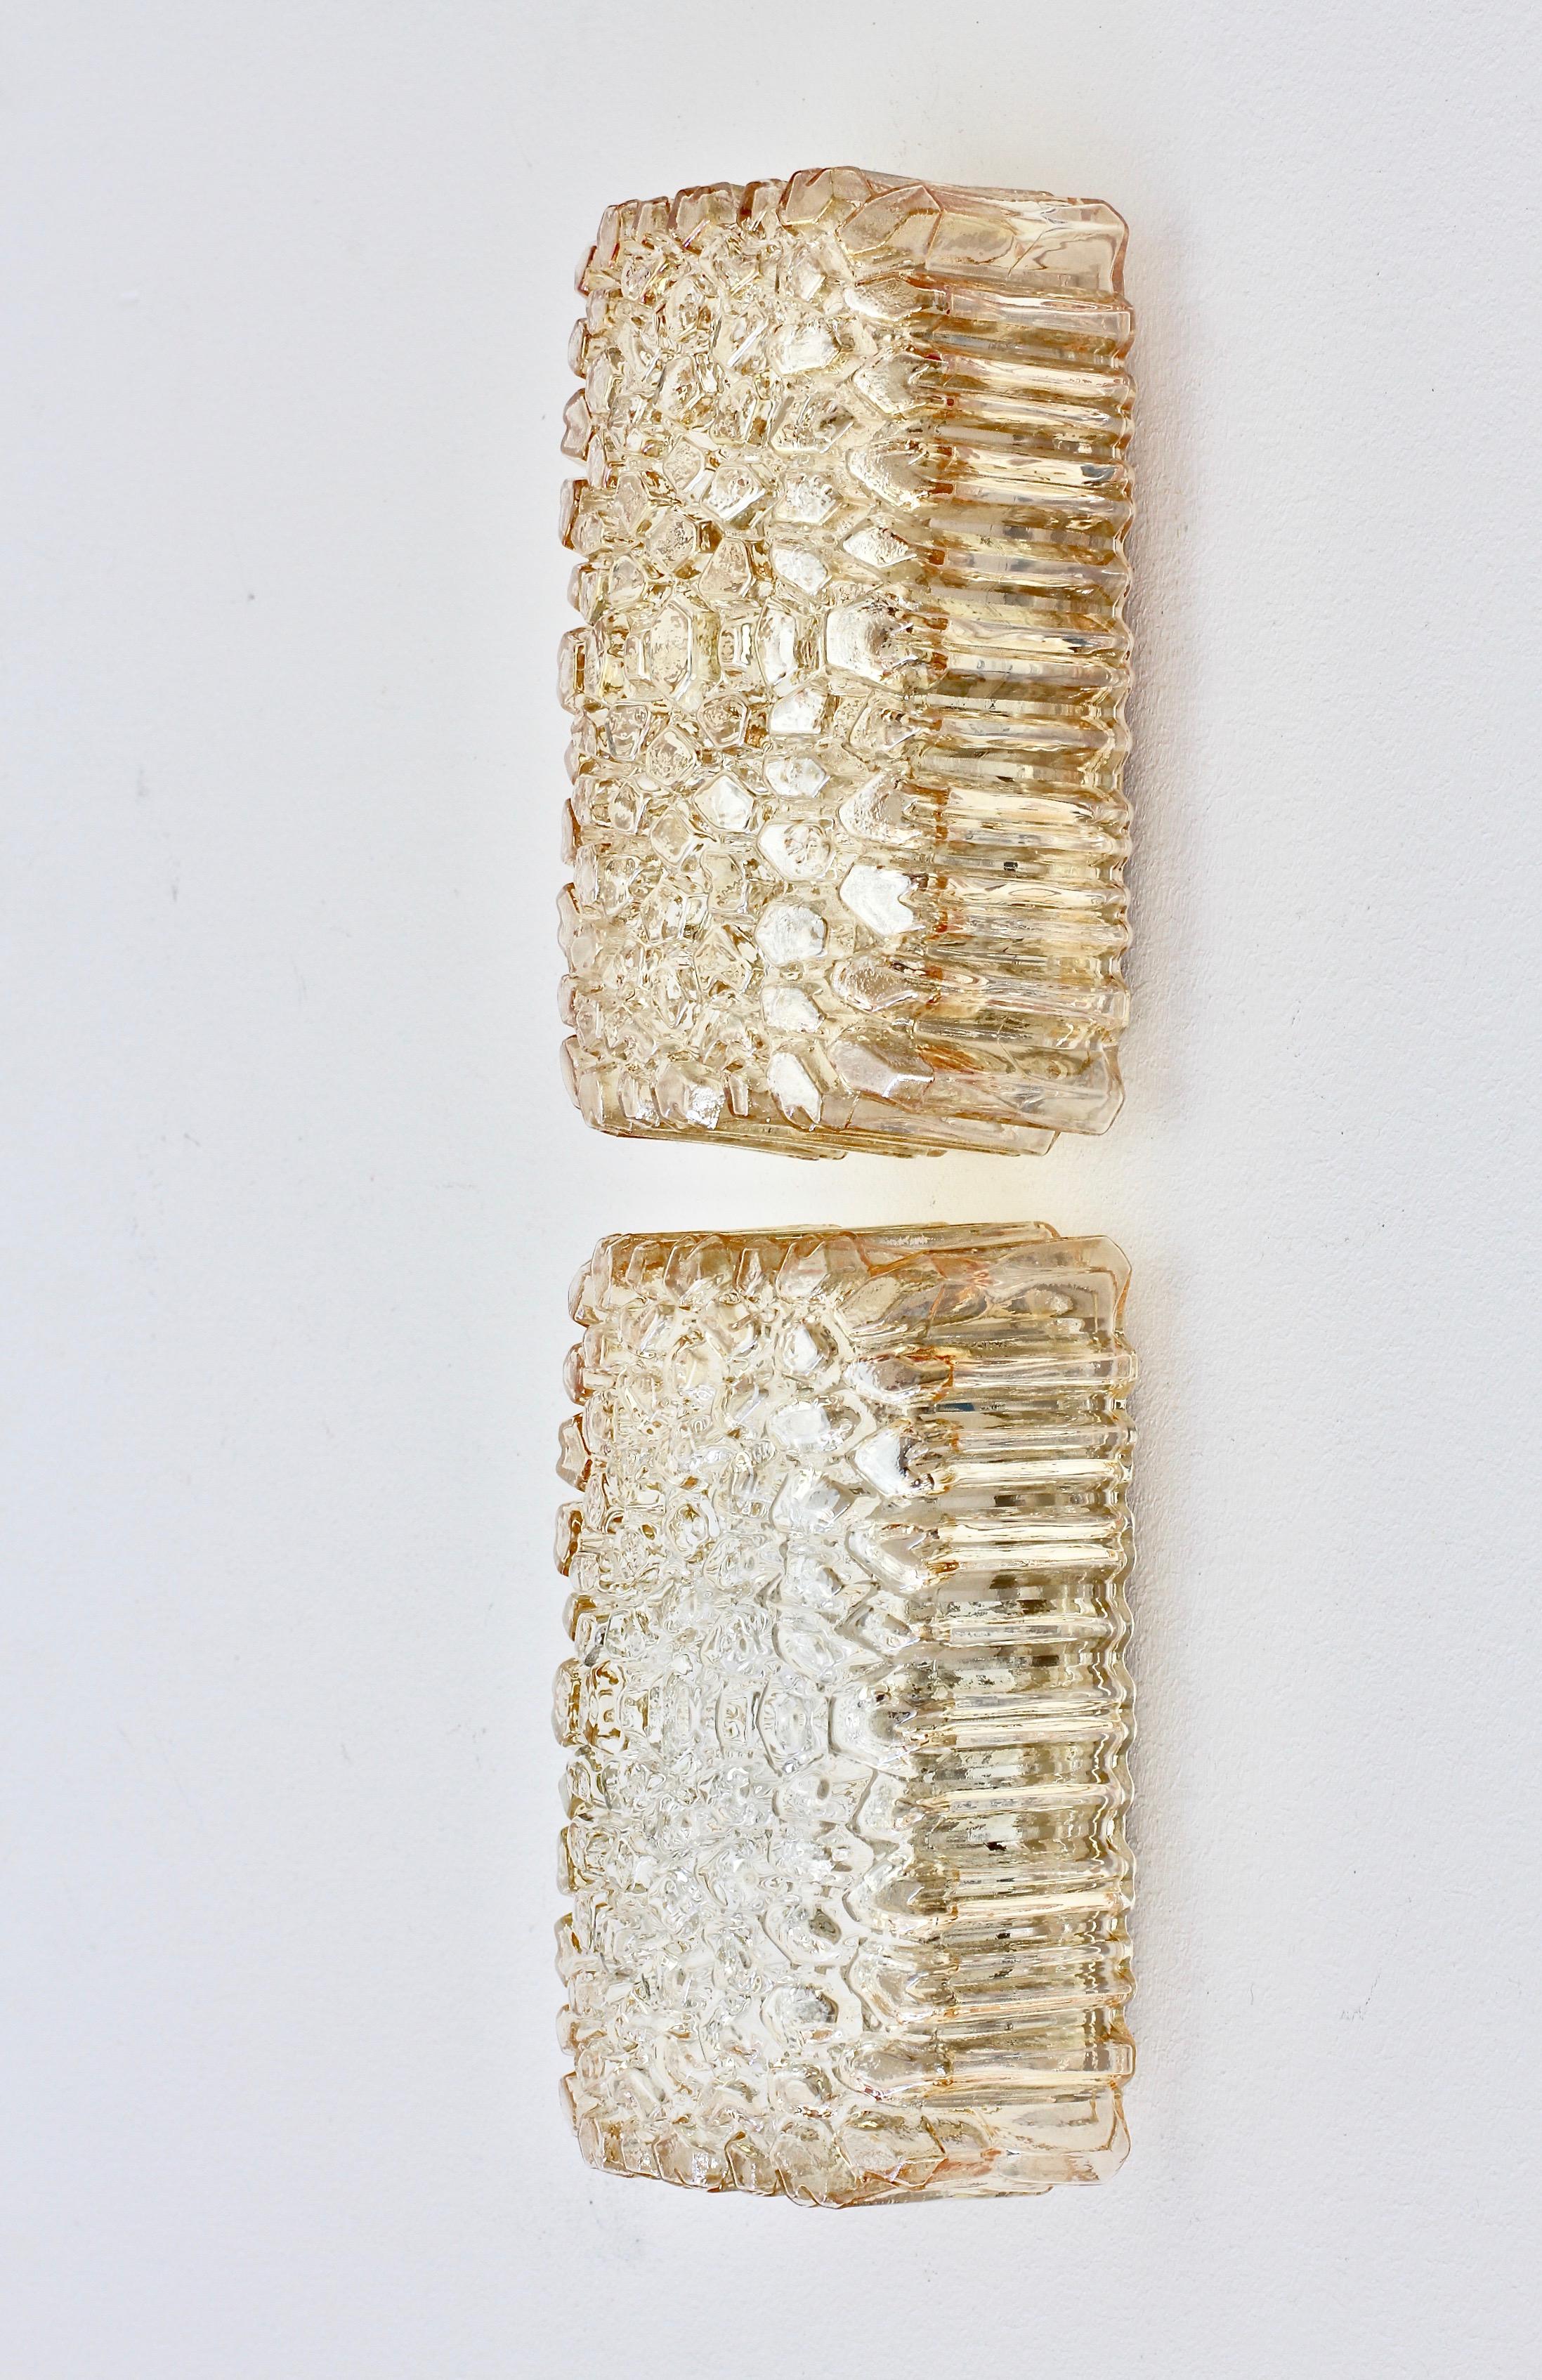 German Limburg Pair of Wall Lights 1970s Organic Textured Amber Toned Ice Glass Sconces